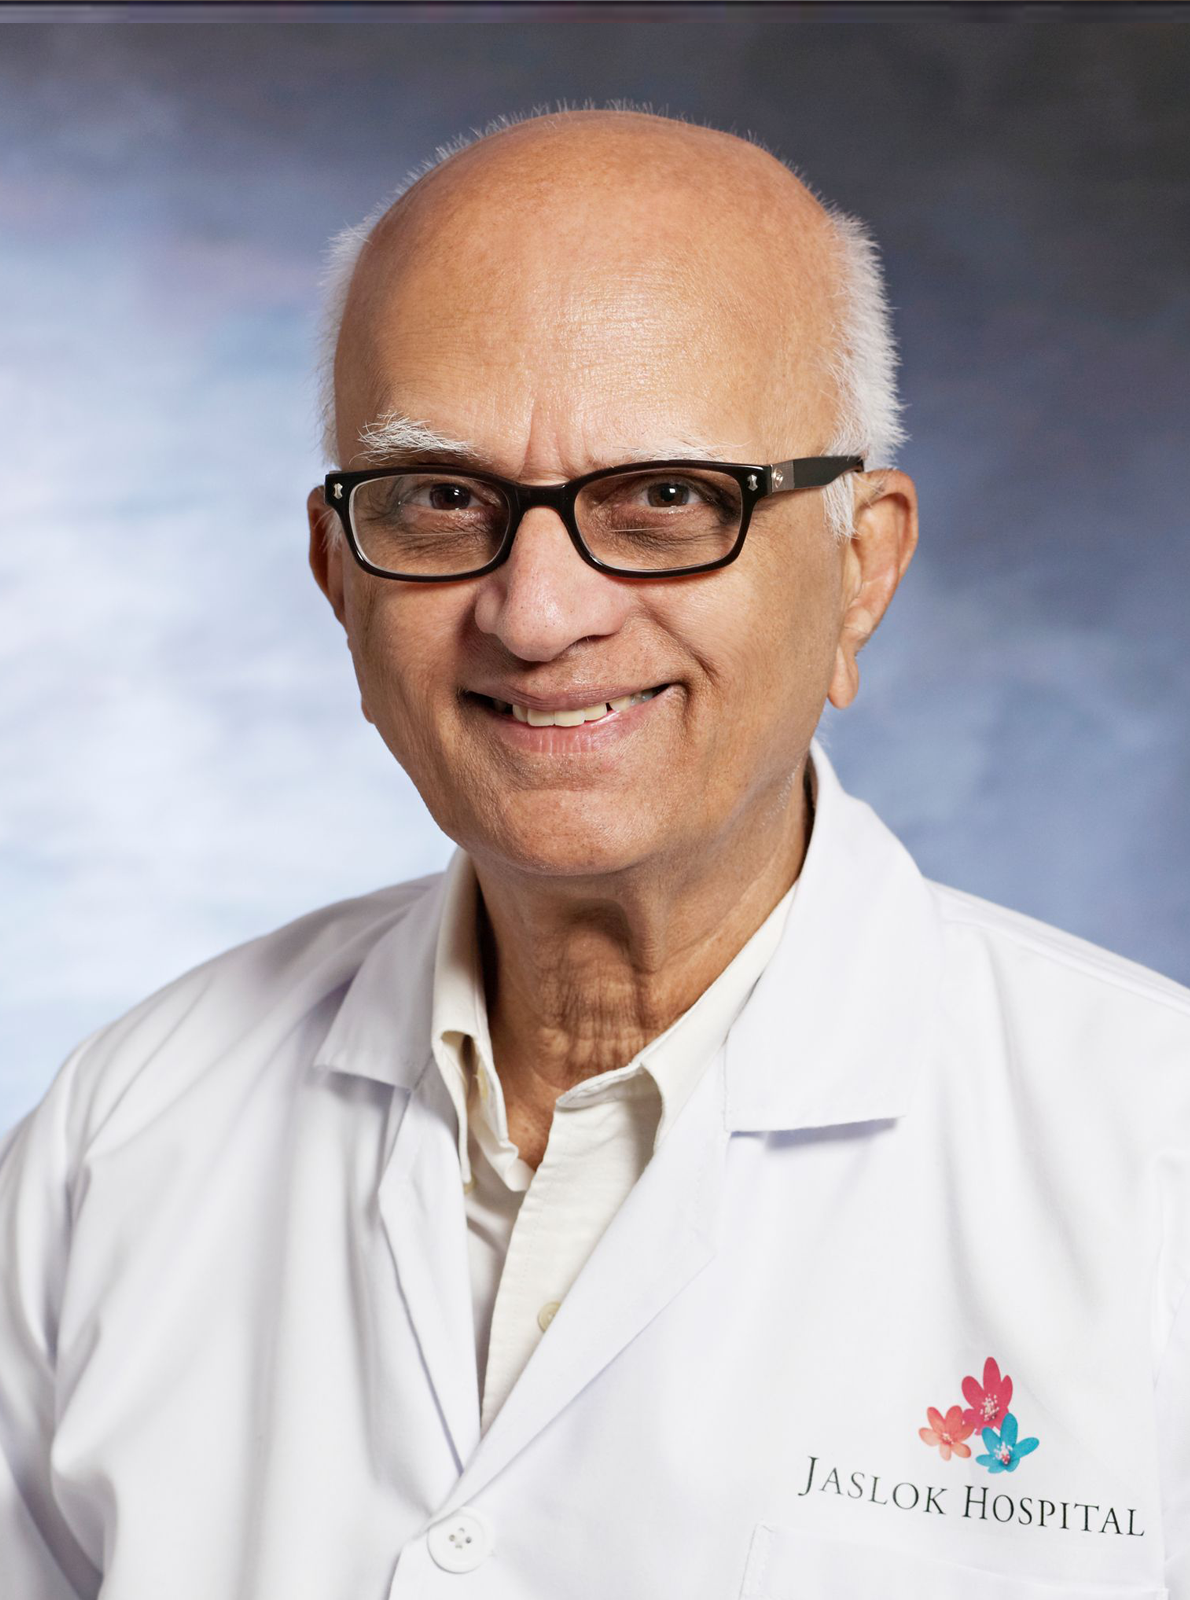 Dr. Sunil Pandya